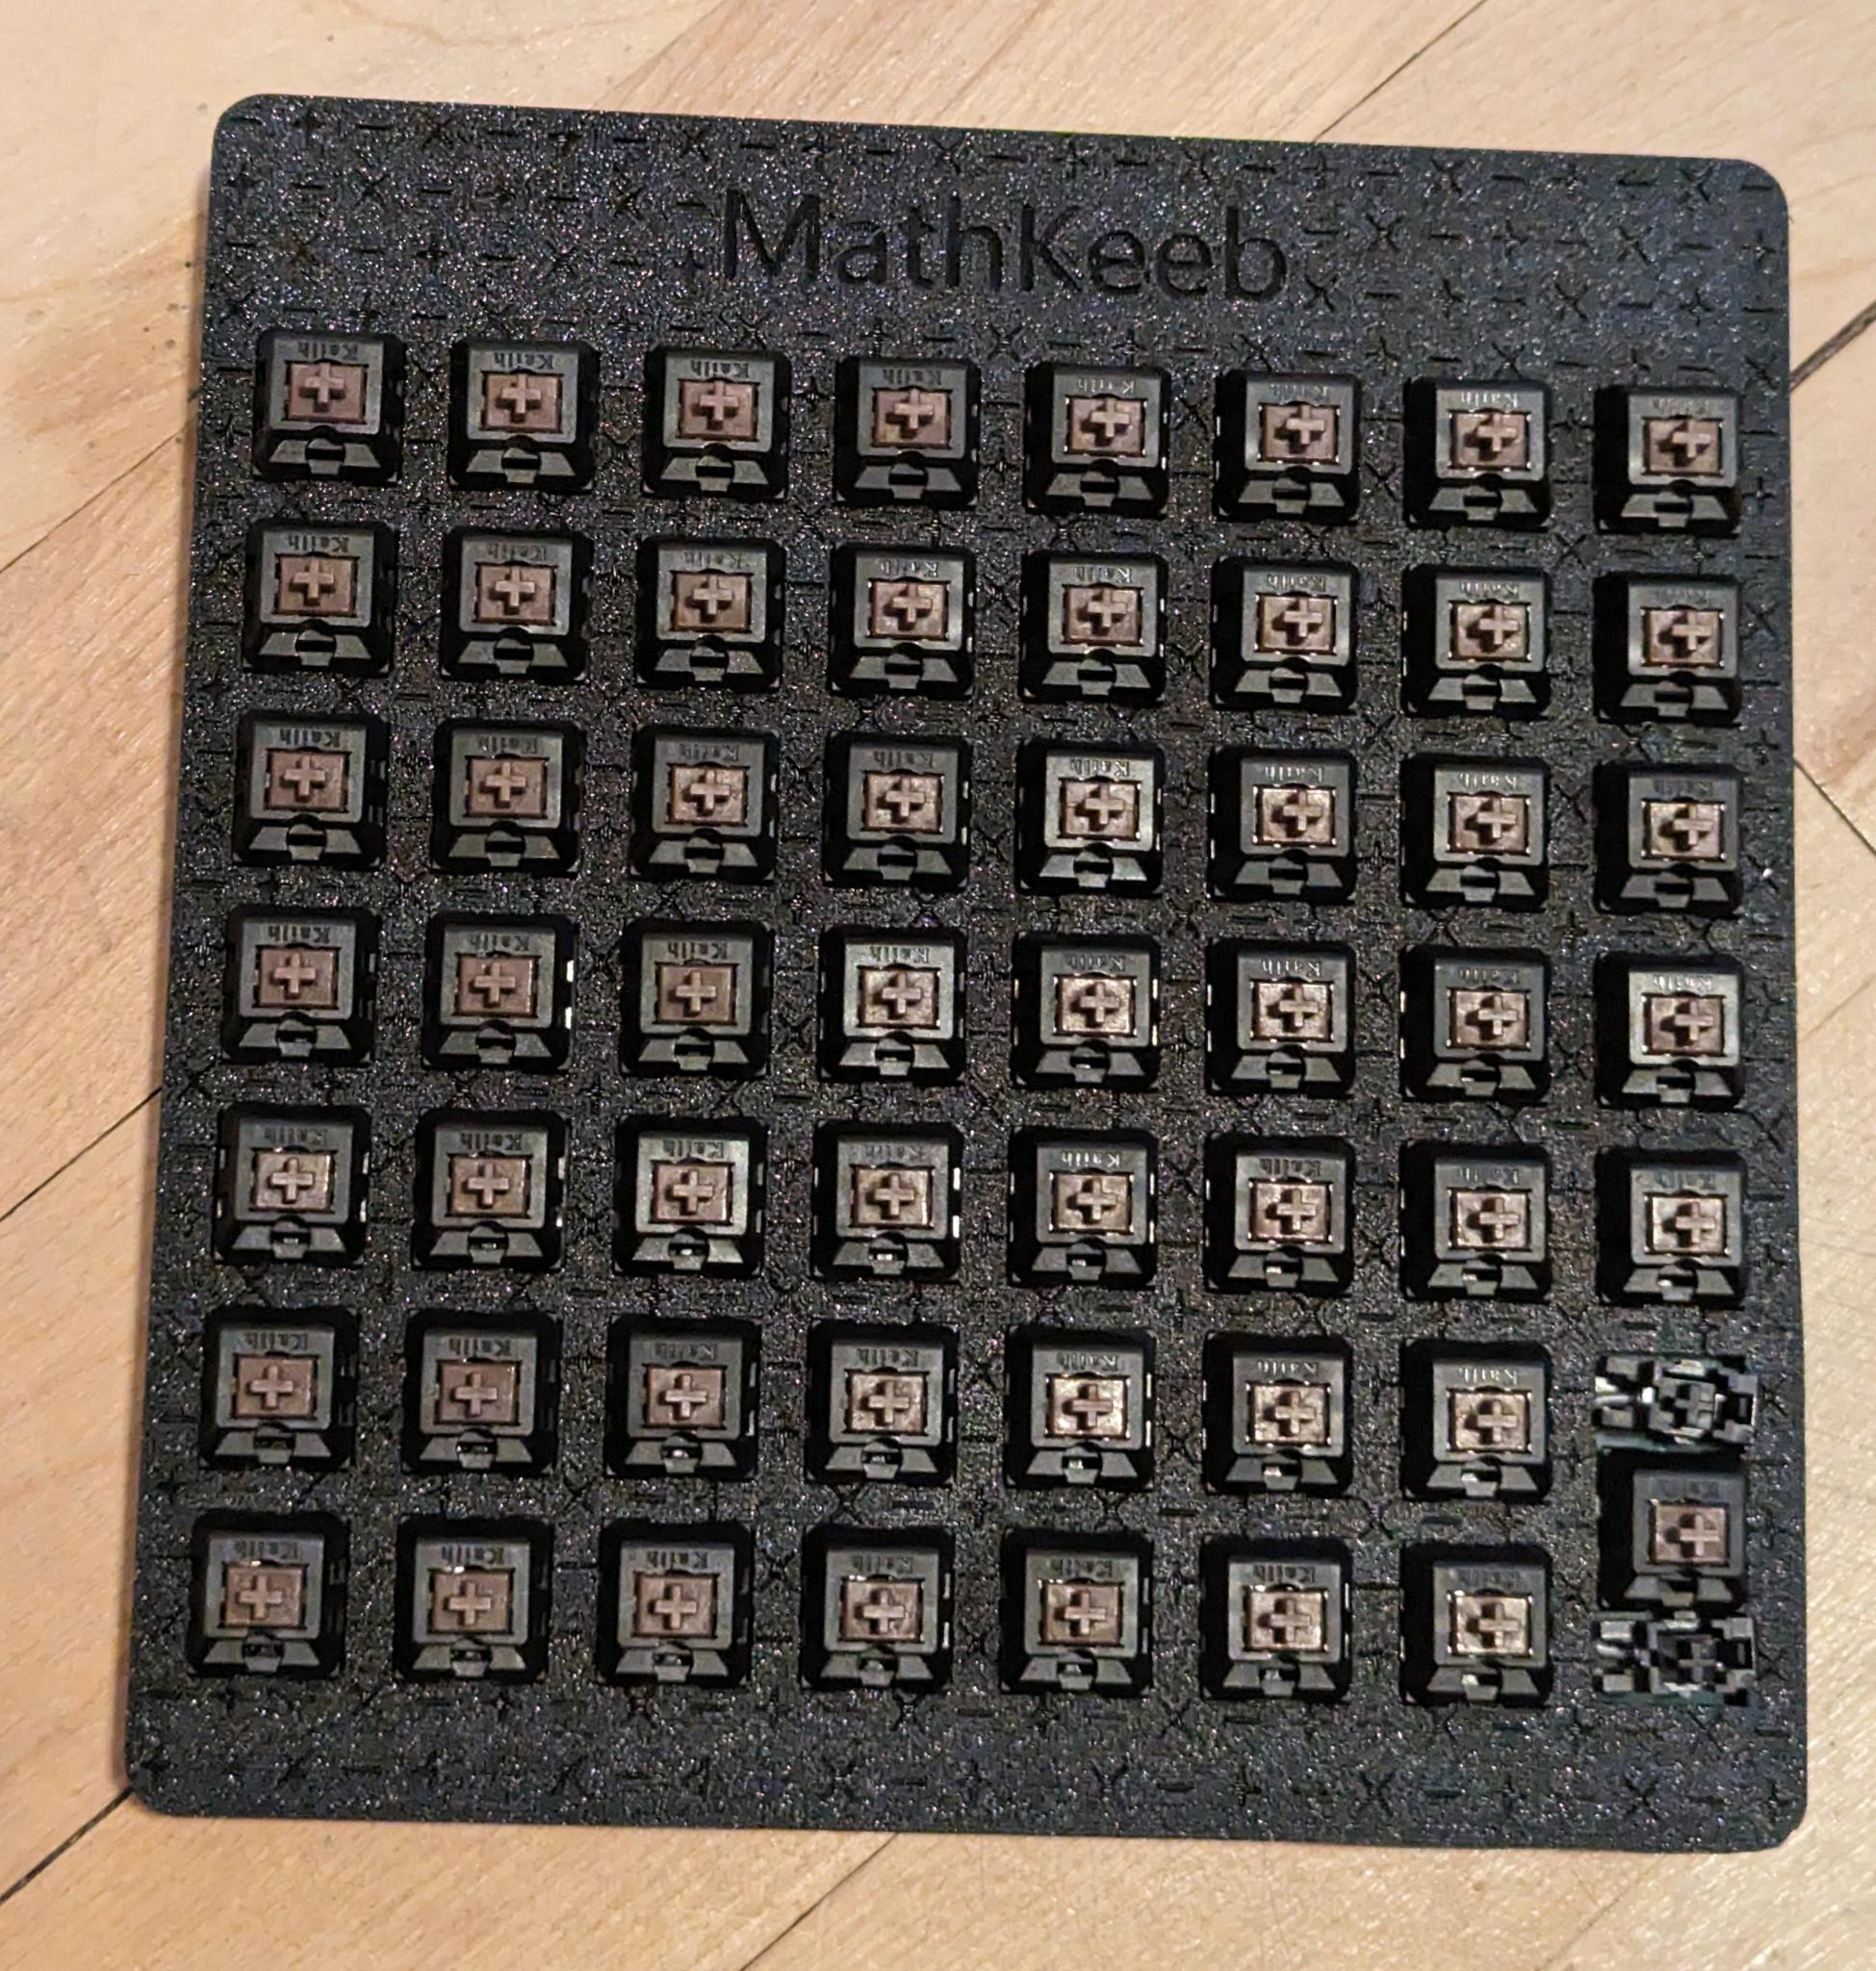 MathKeeb case 3d model